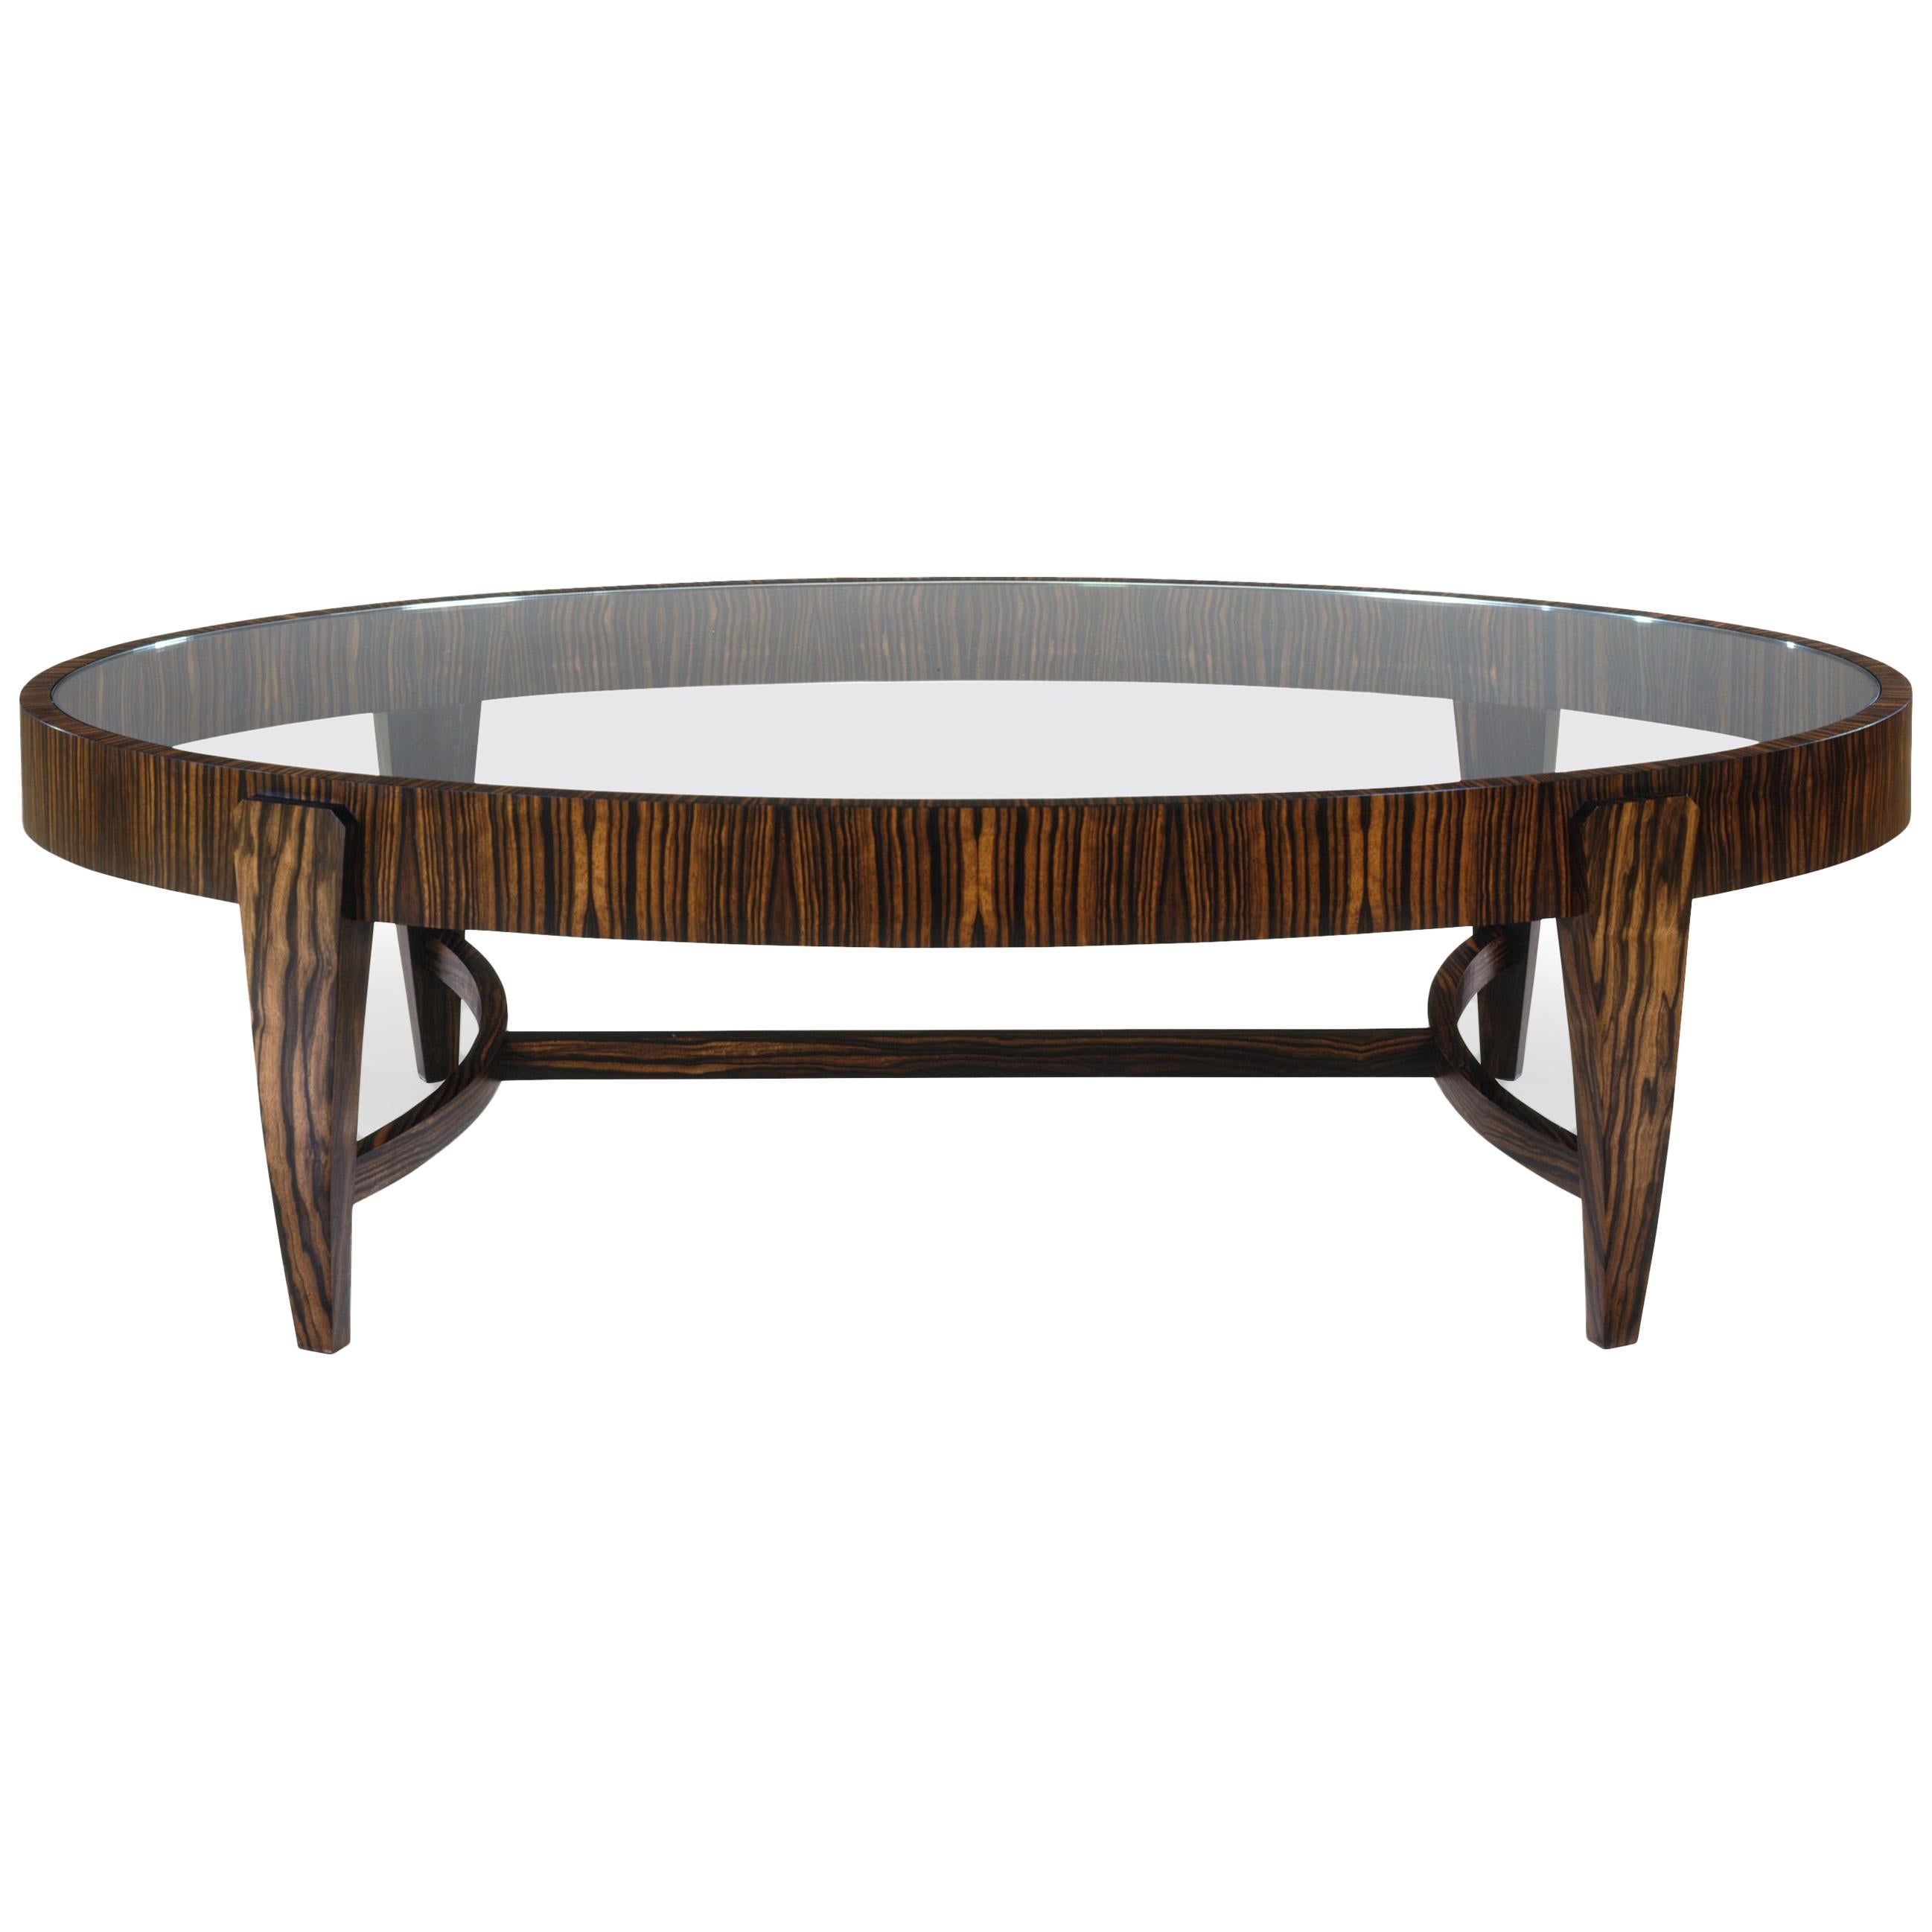 Tusk Oval Coffee Table, Contemporary Handmade Macassar Ebony and Glass